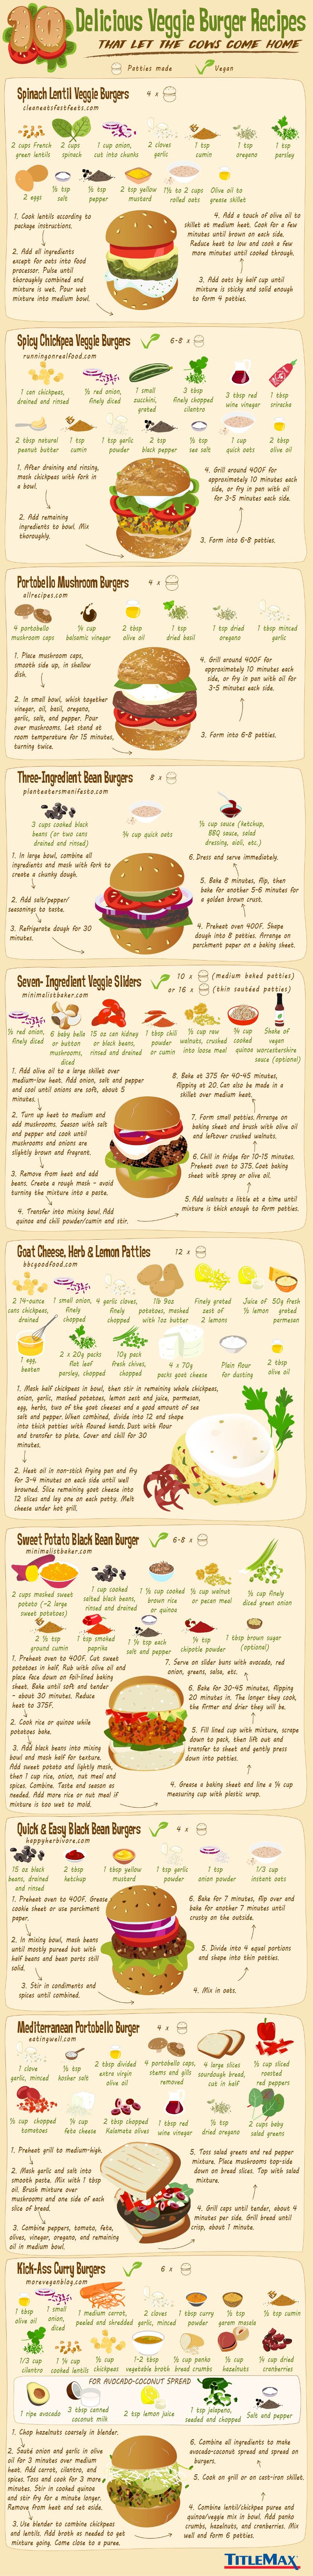 10 Delicious Veggie Burger Recipes for Vegan BBQ Guests